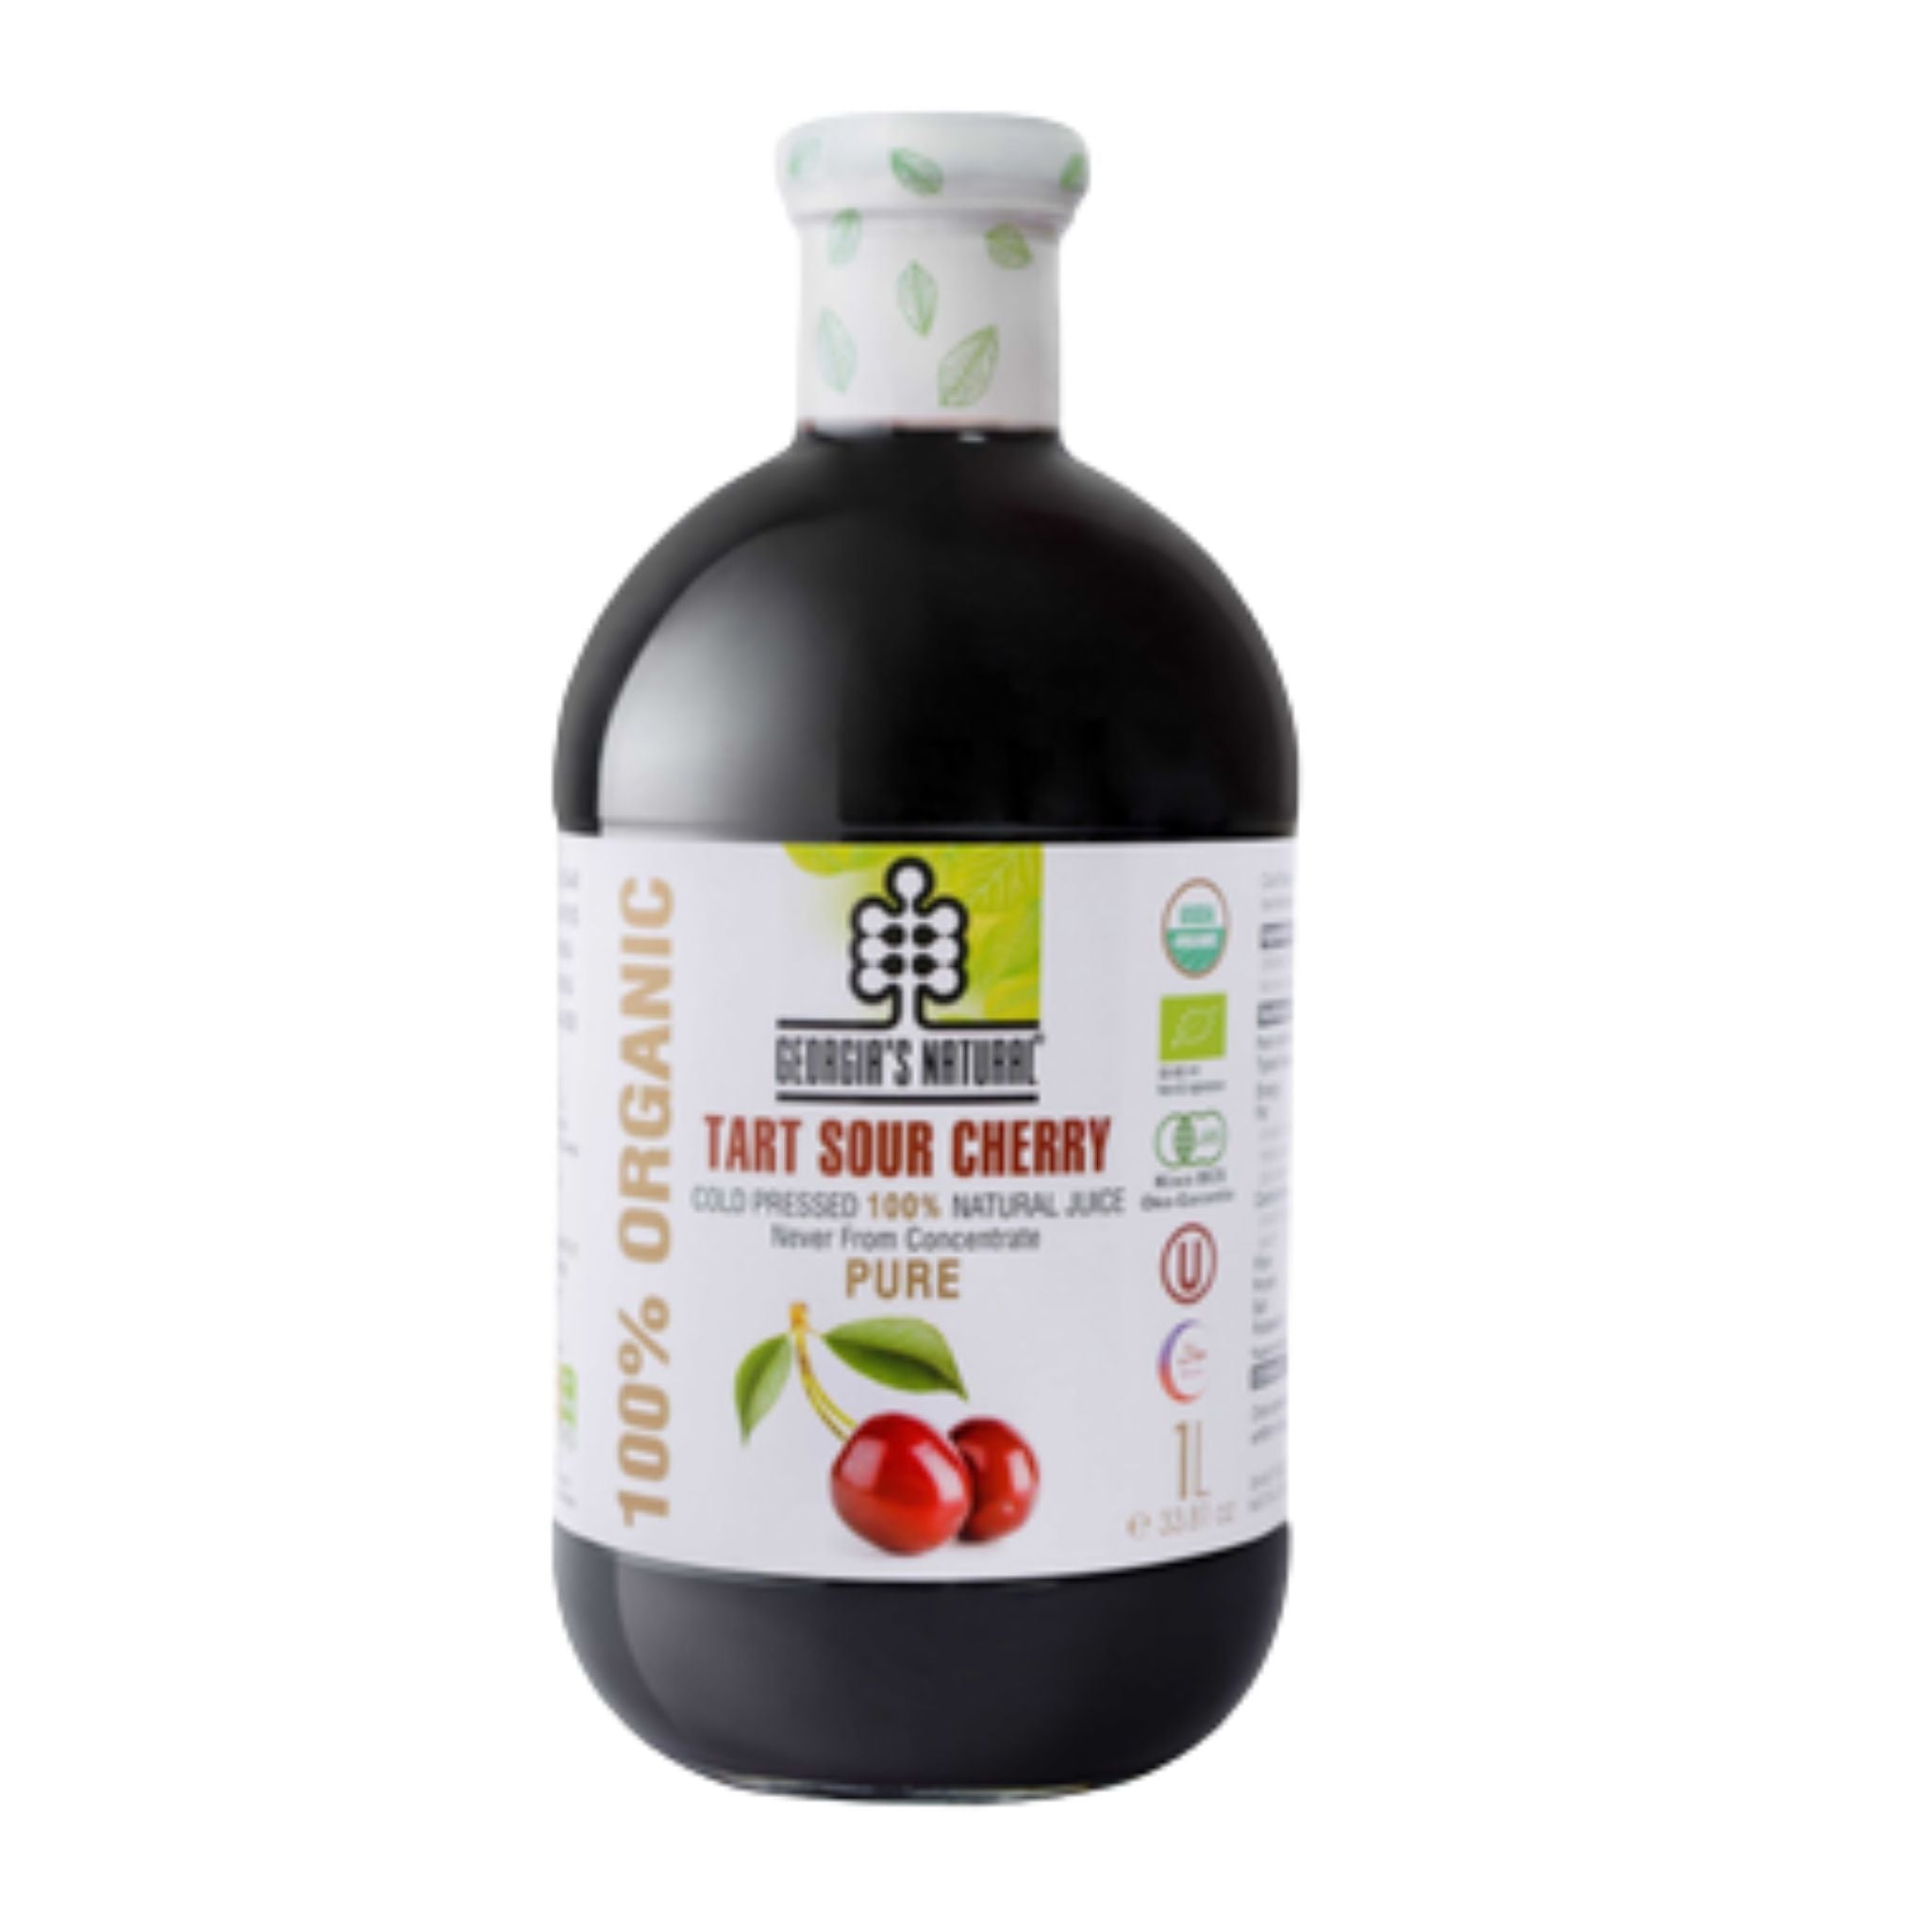 Georgia's Natural -Tart Sour Cherry Juice Organic (6 Pack)